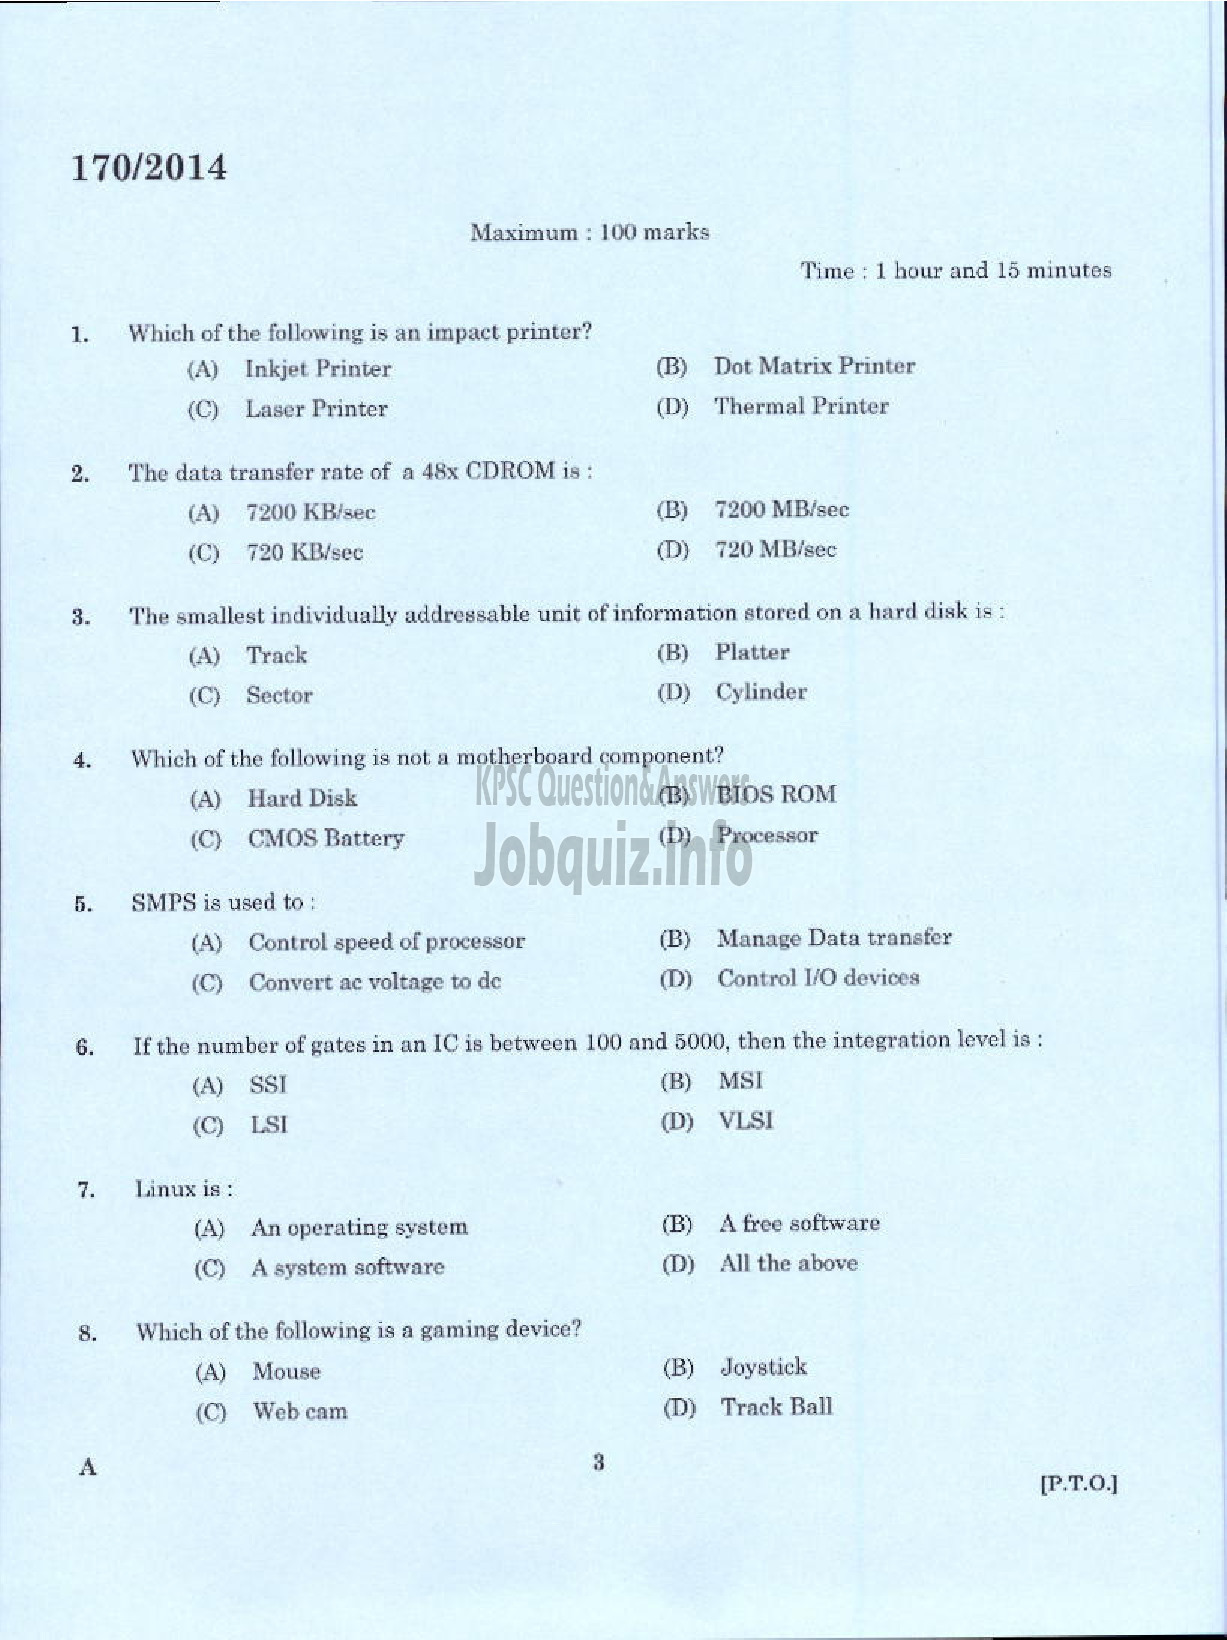 Kerala PSC Question Paper - TRADESMAN COMPUTER HARDWARE MAINTENANCE TECHNICAL EDUCATION TVPM IDK AND PKD-1